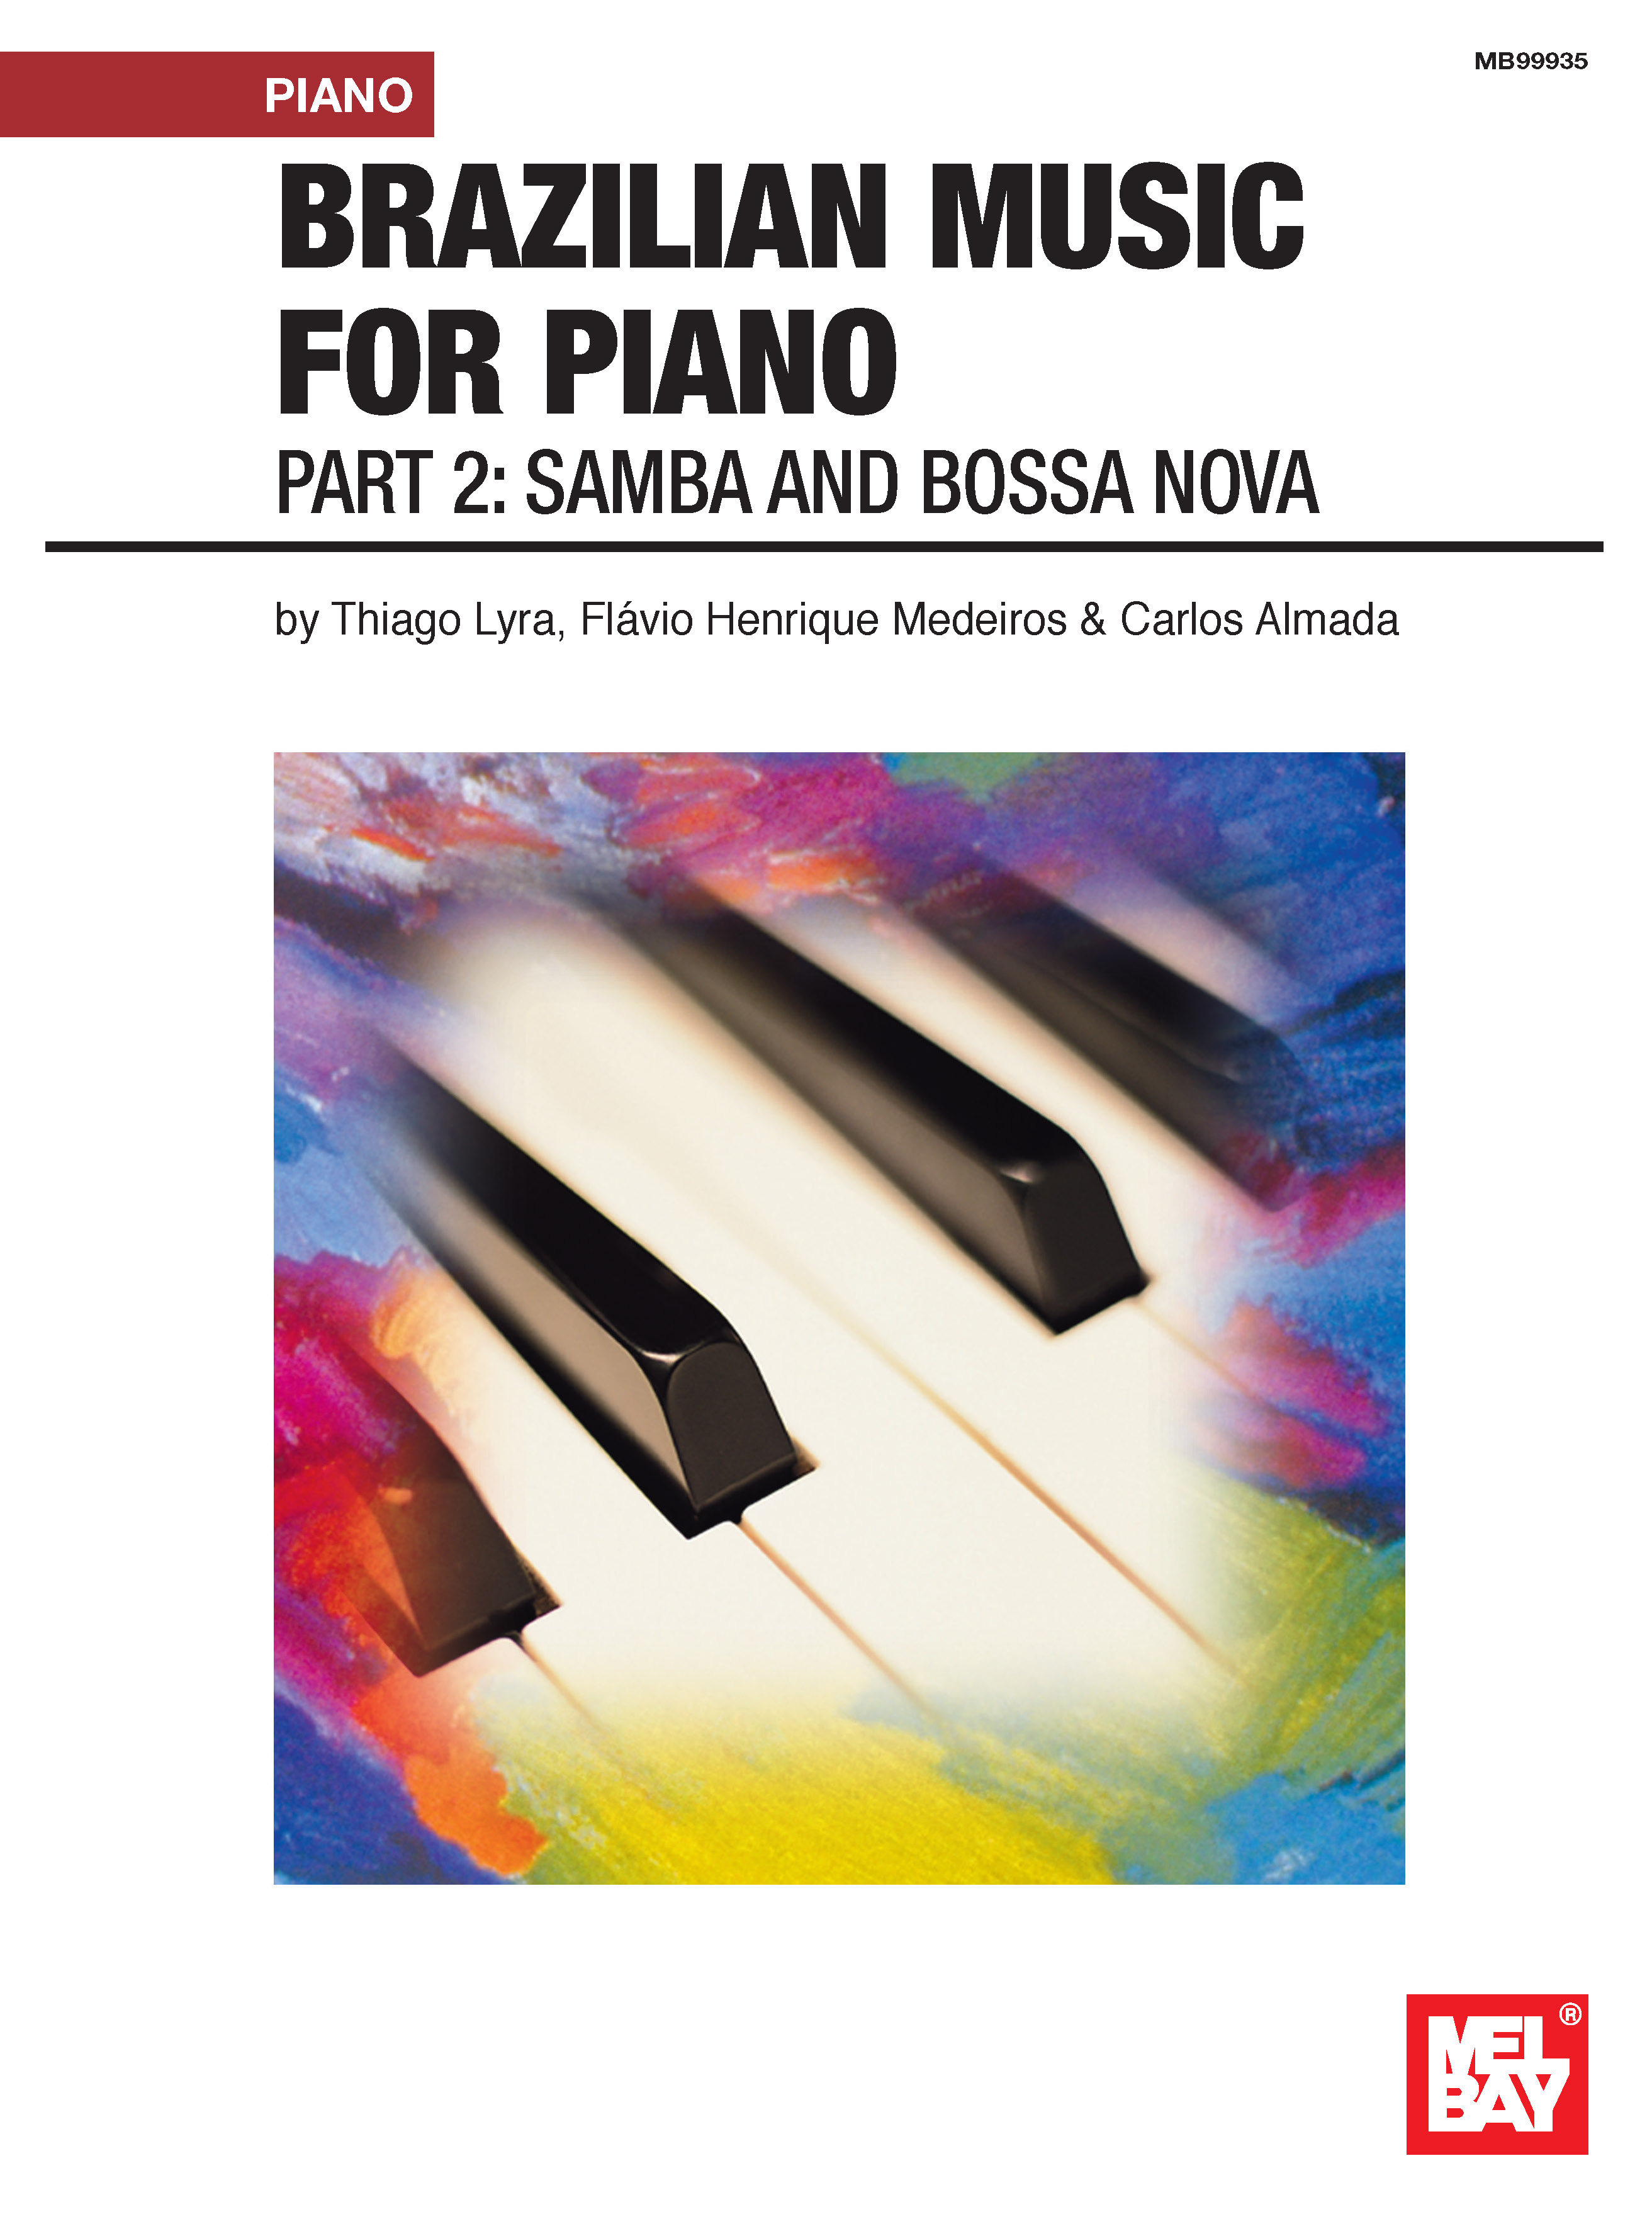 Brazilian Music for Piano: Part 2